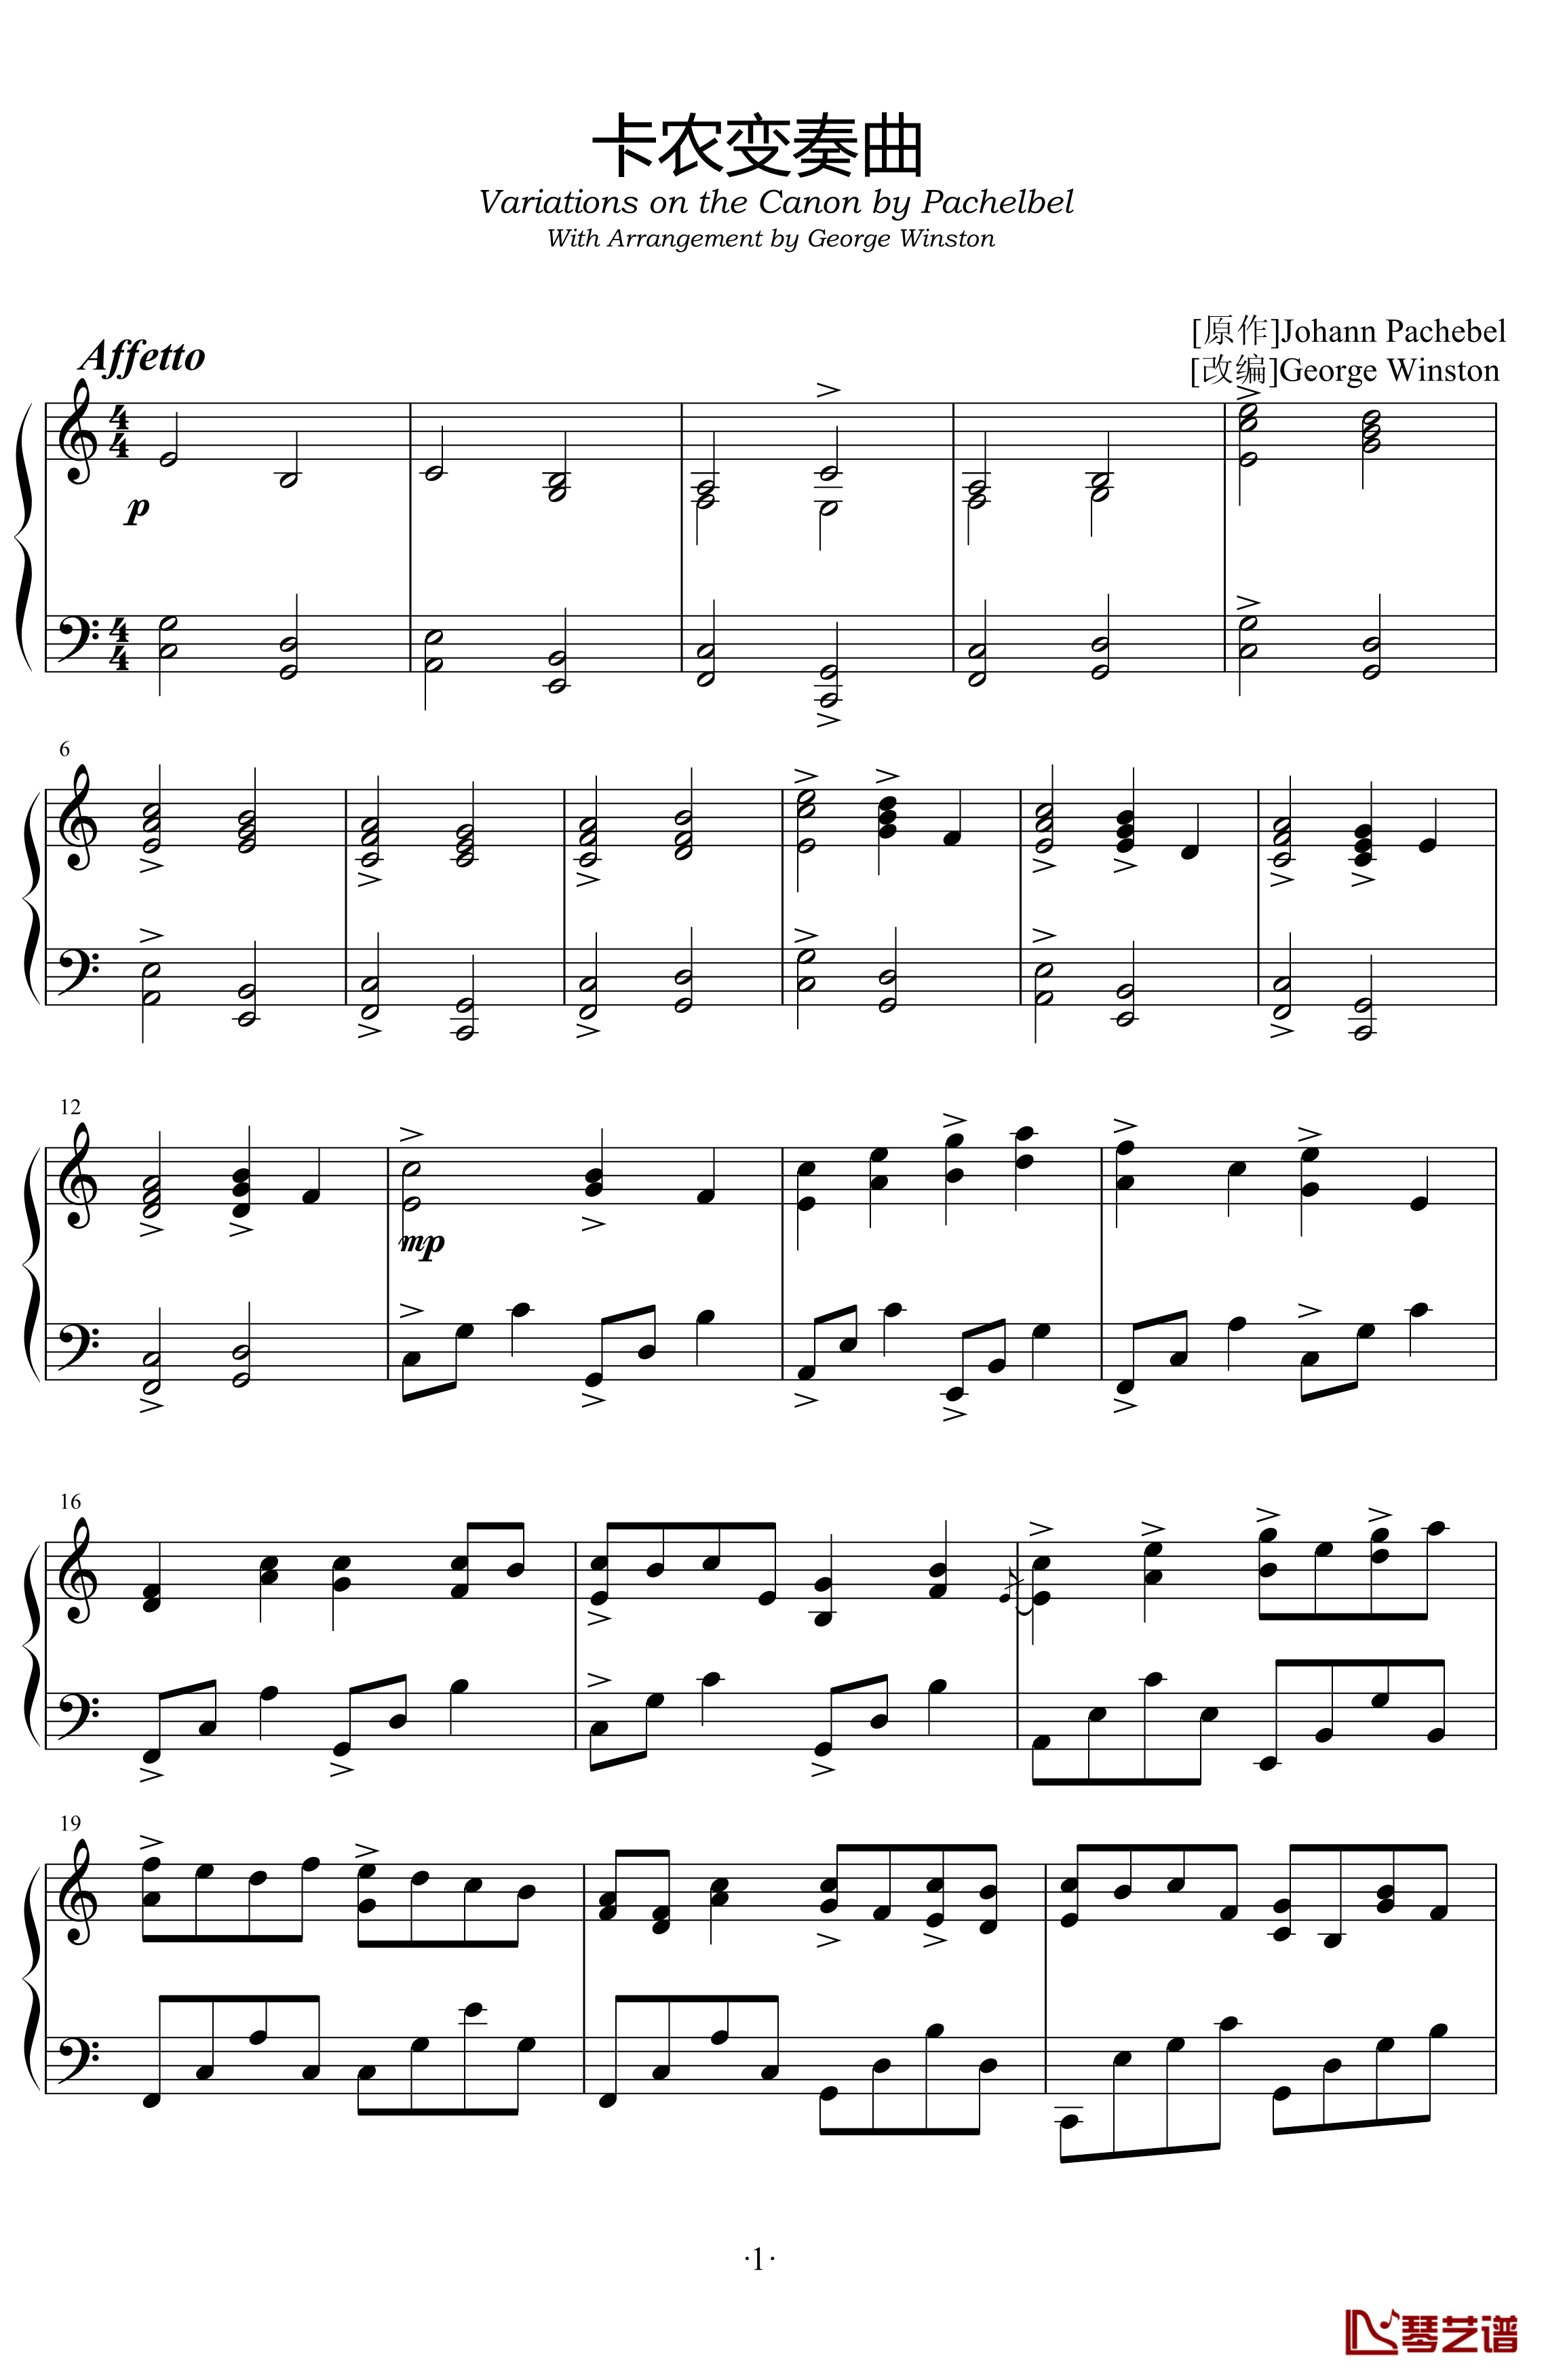 卡农变奏曲钢琴谱-Variations on the Canon by Pachelbel V.L.最终定本-George Winston1